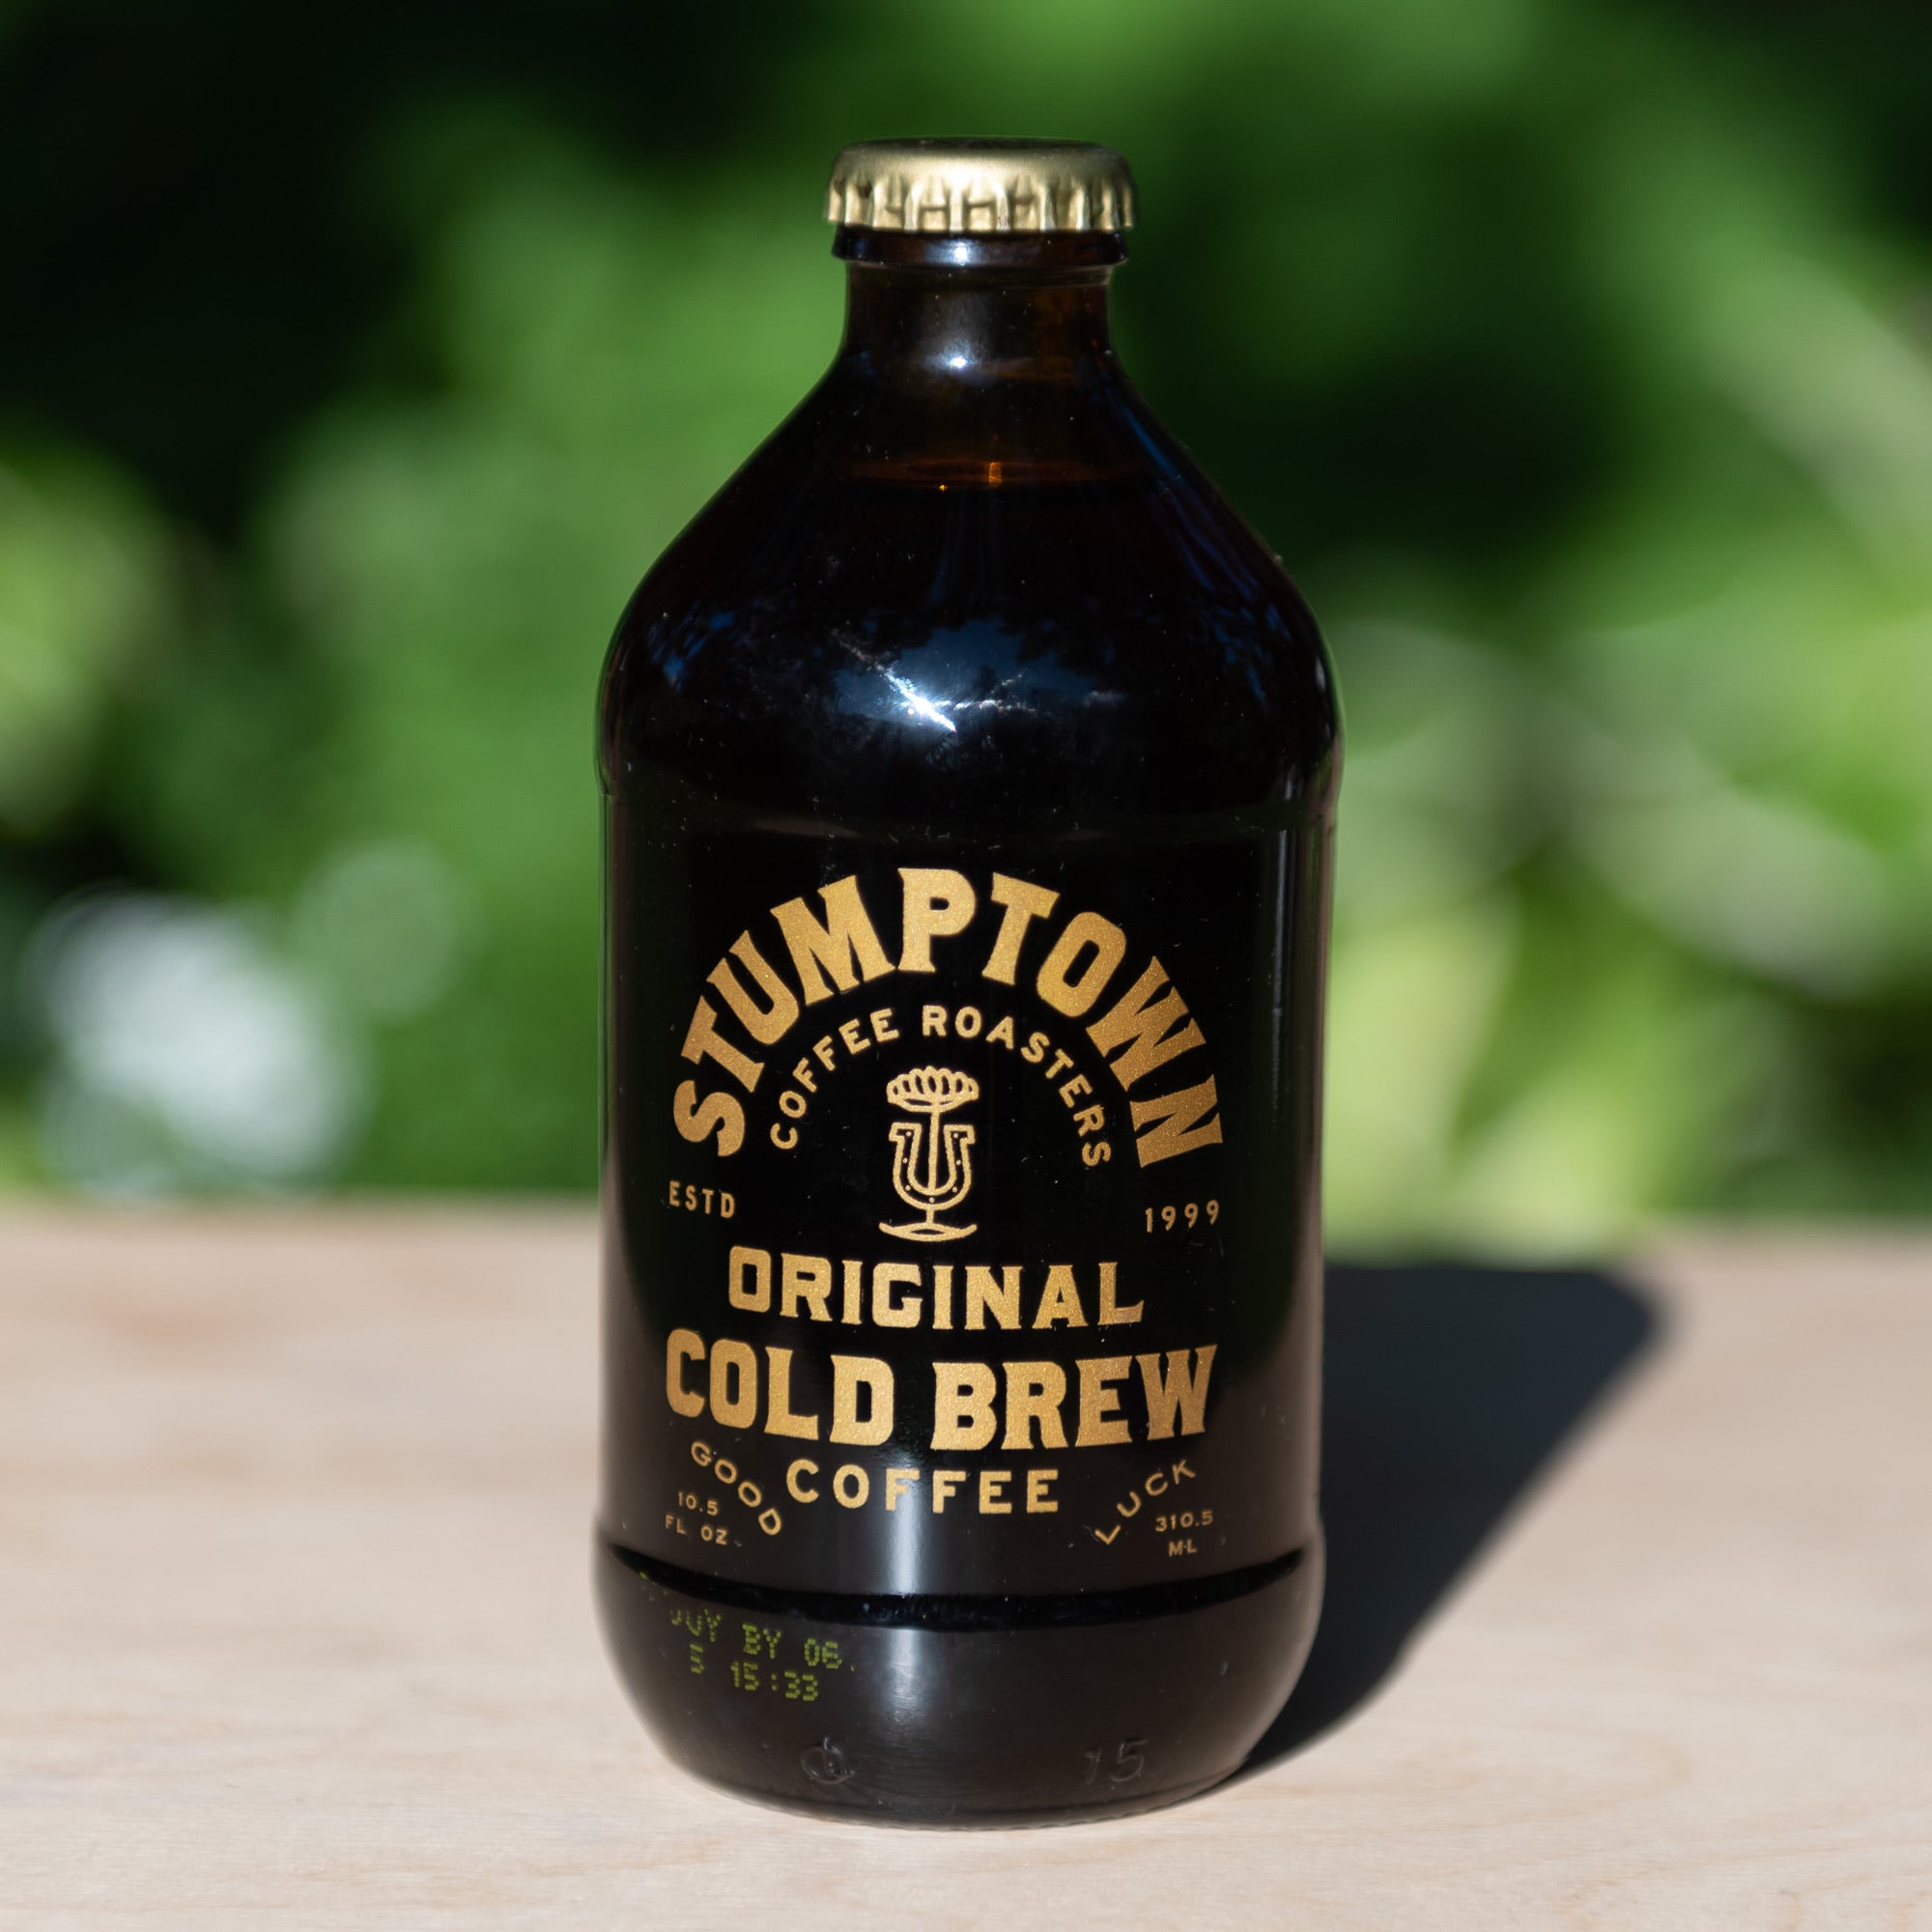 Stumptown Original Cold Brew